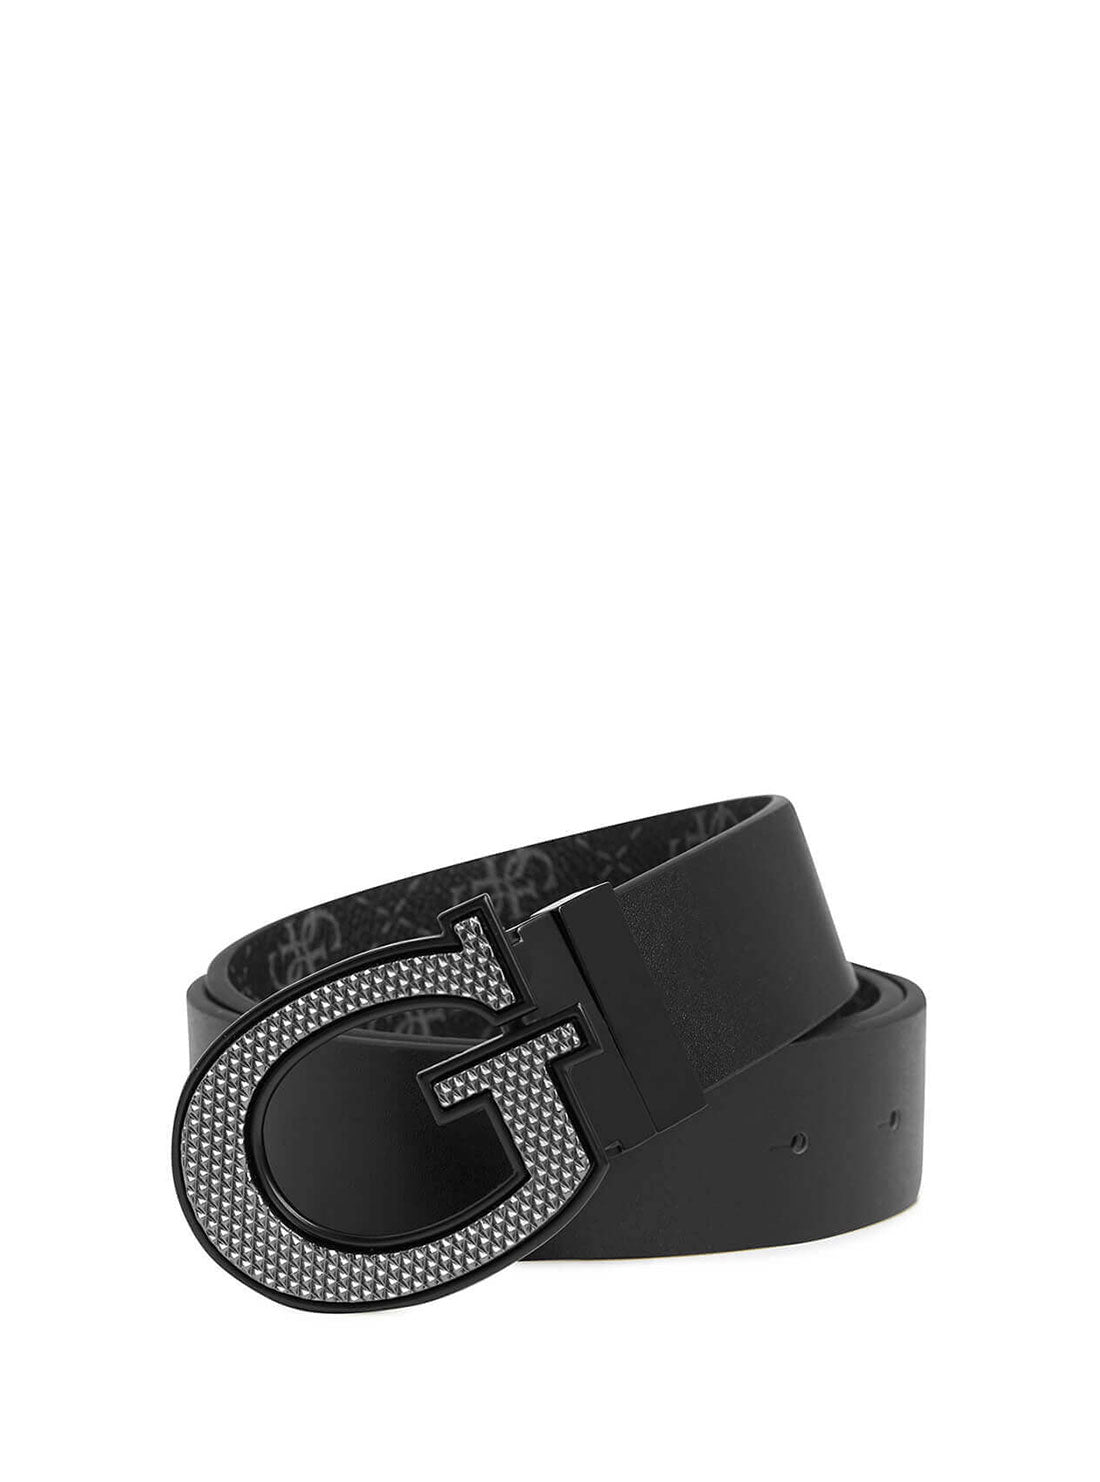 Guess 35mm Reversible Logo Buckle Belt in Black for Men